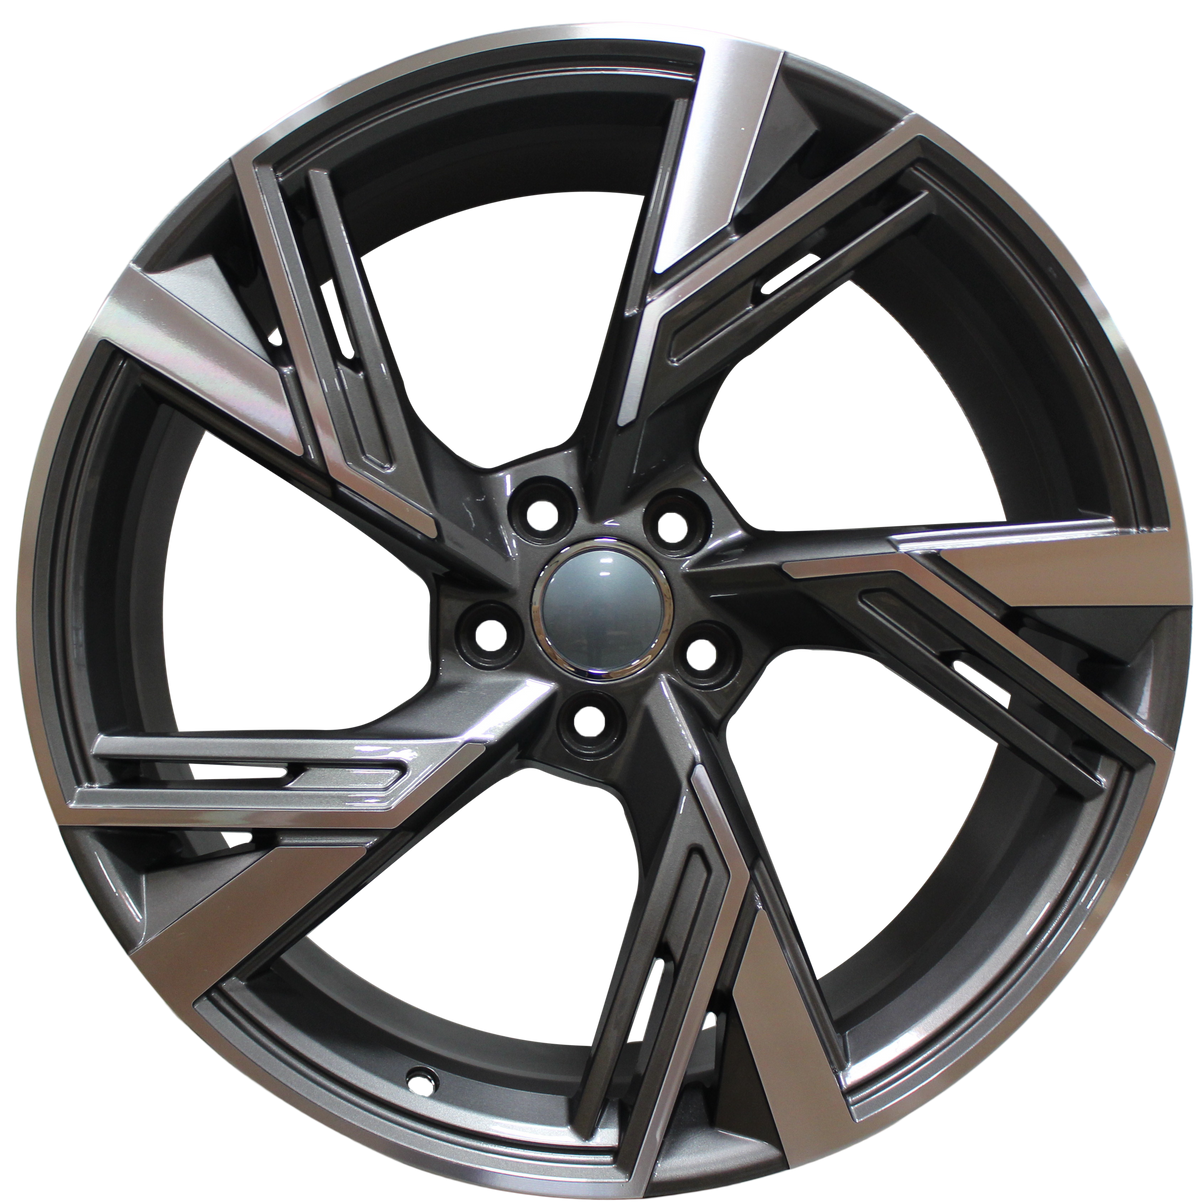 19 Inch Audi RS Style Rims Gunmetal Machined Wheels